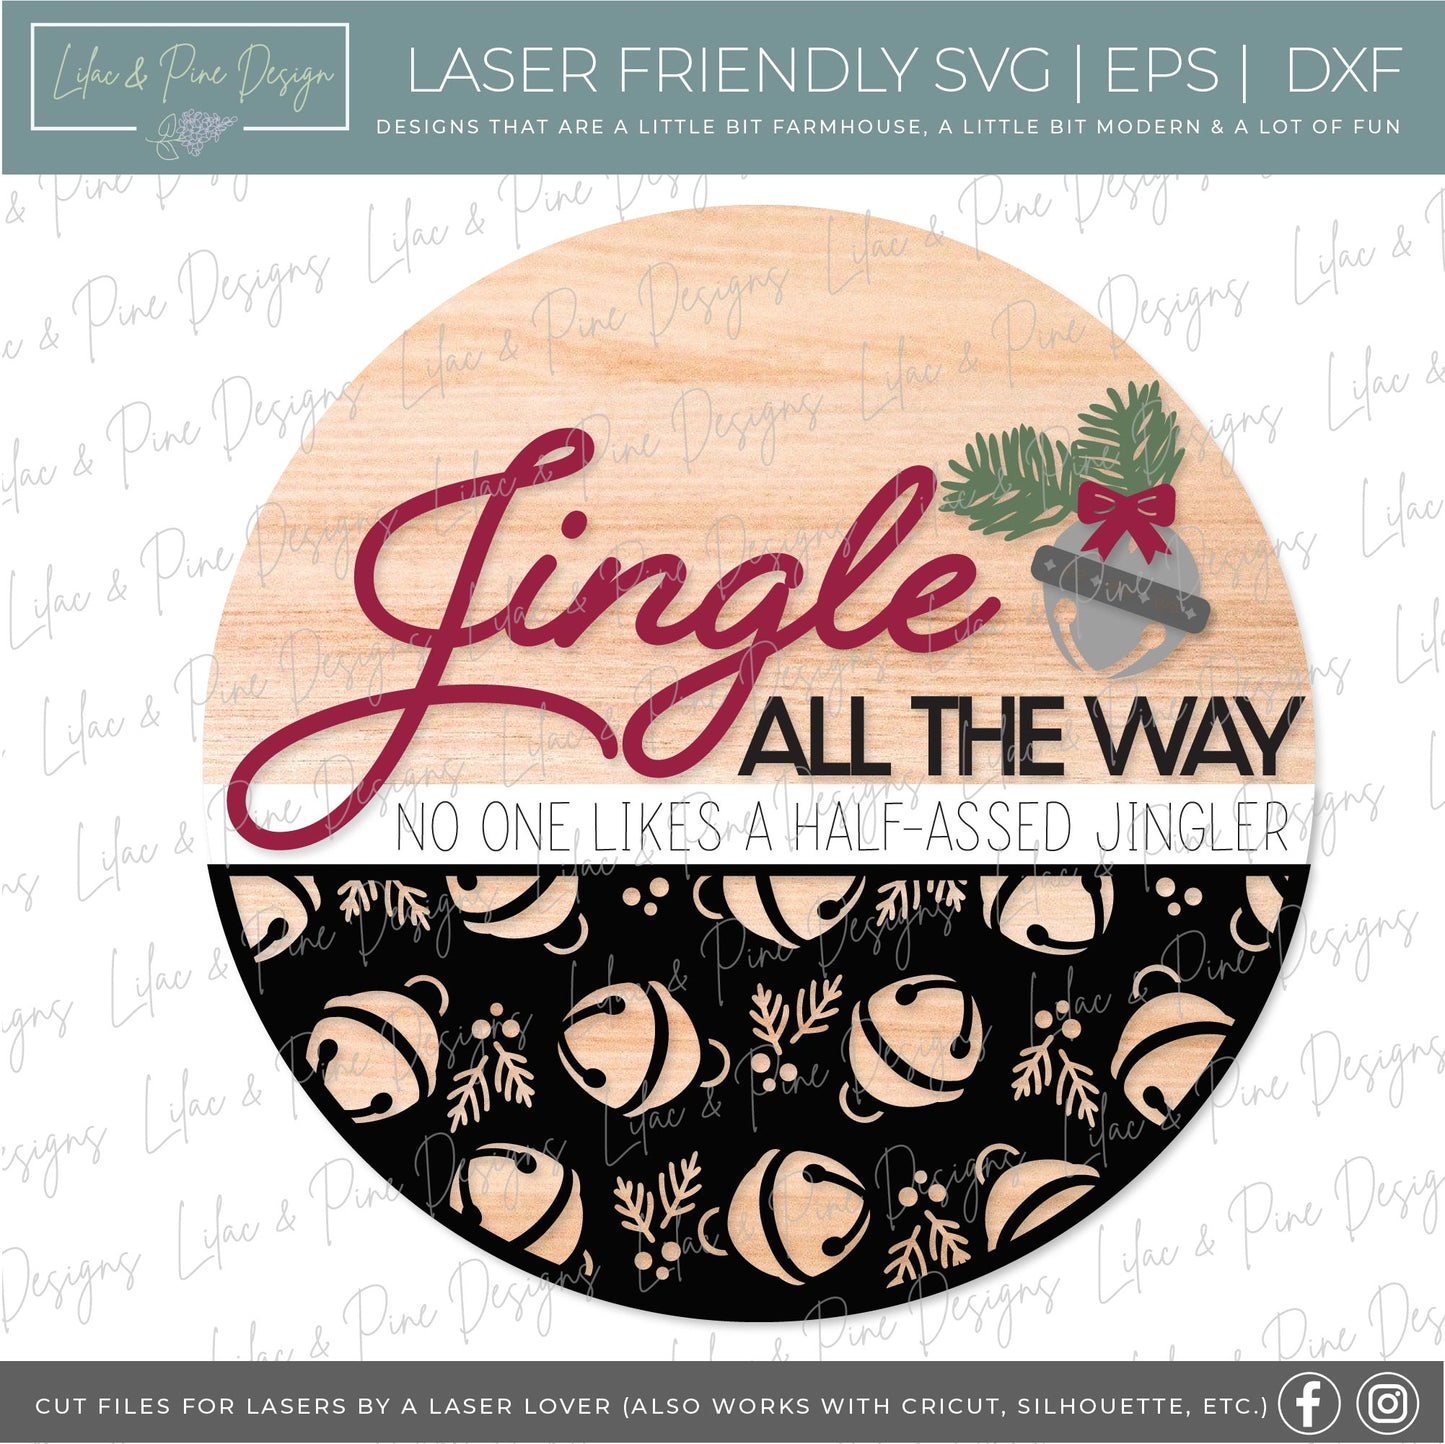 Lilac and Pine Catalog - Volume 1 - 245 digital designs - laser SVG files - Glowforge